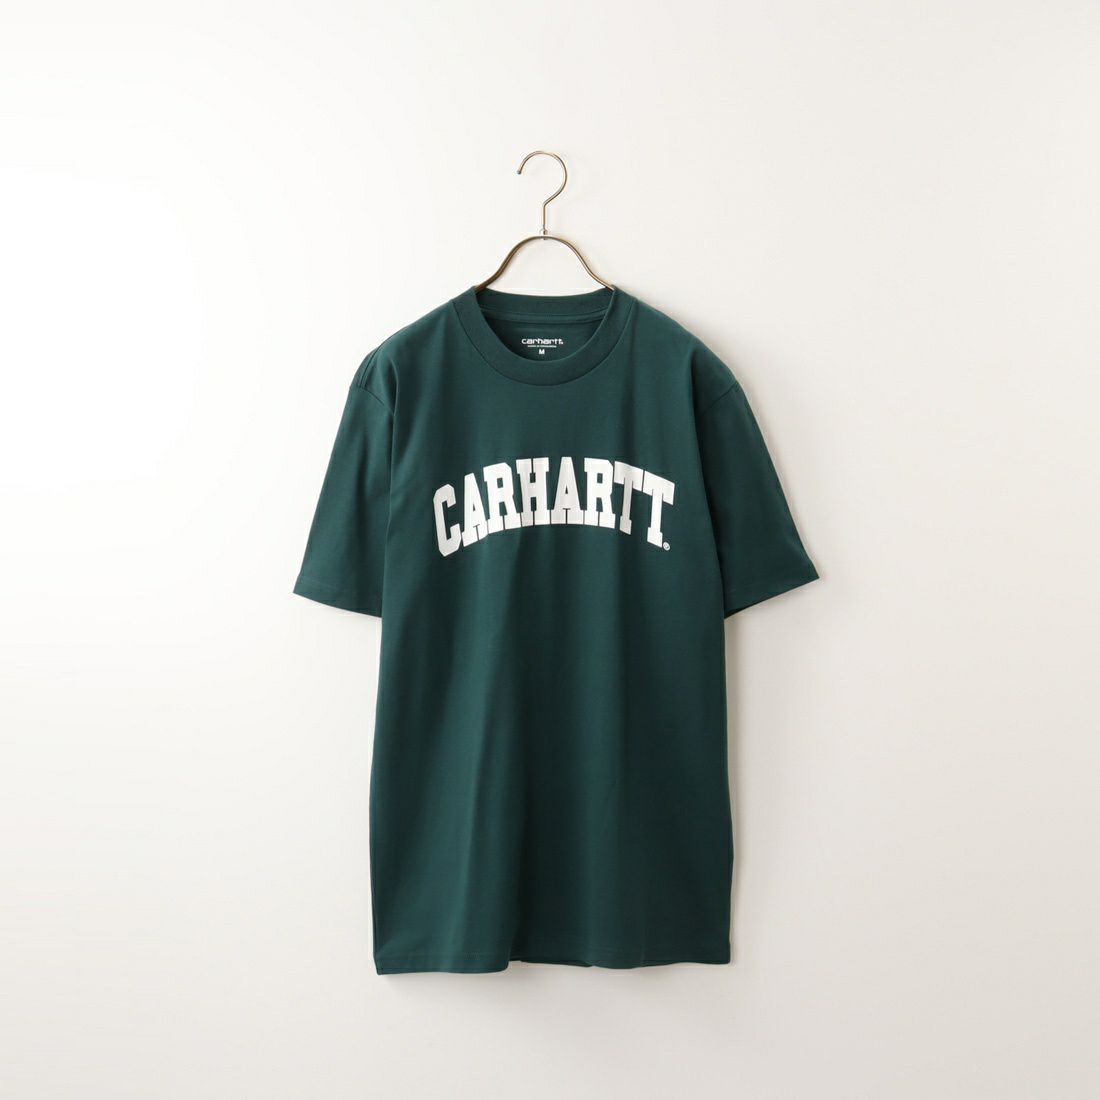 carhartt WIP [カーハートダブリューアイピー] UNIVERSITY ロゴプリントTシャツ [I028990] BOTANIC/WH